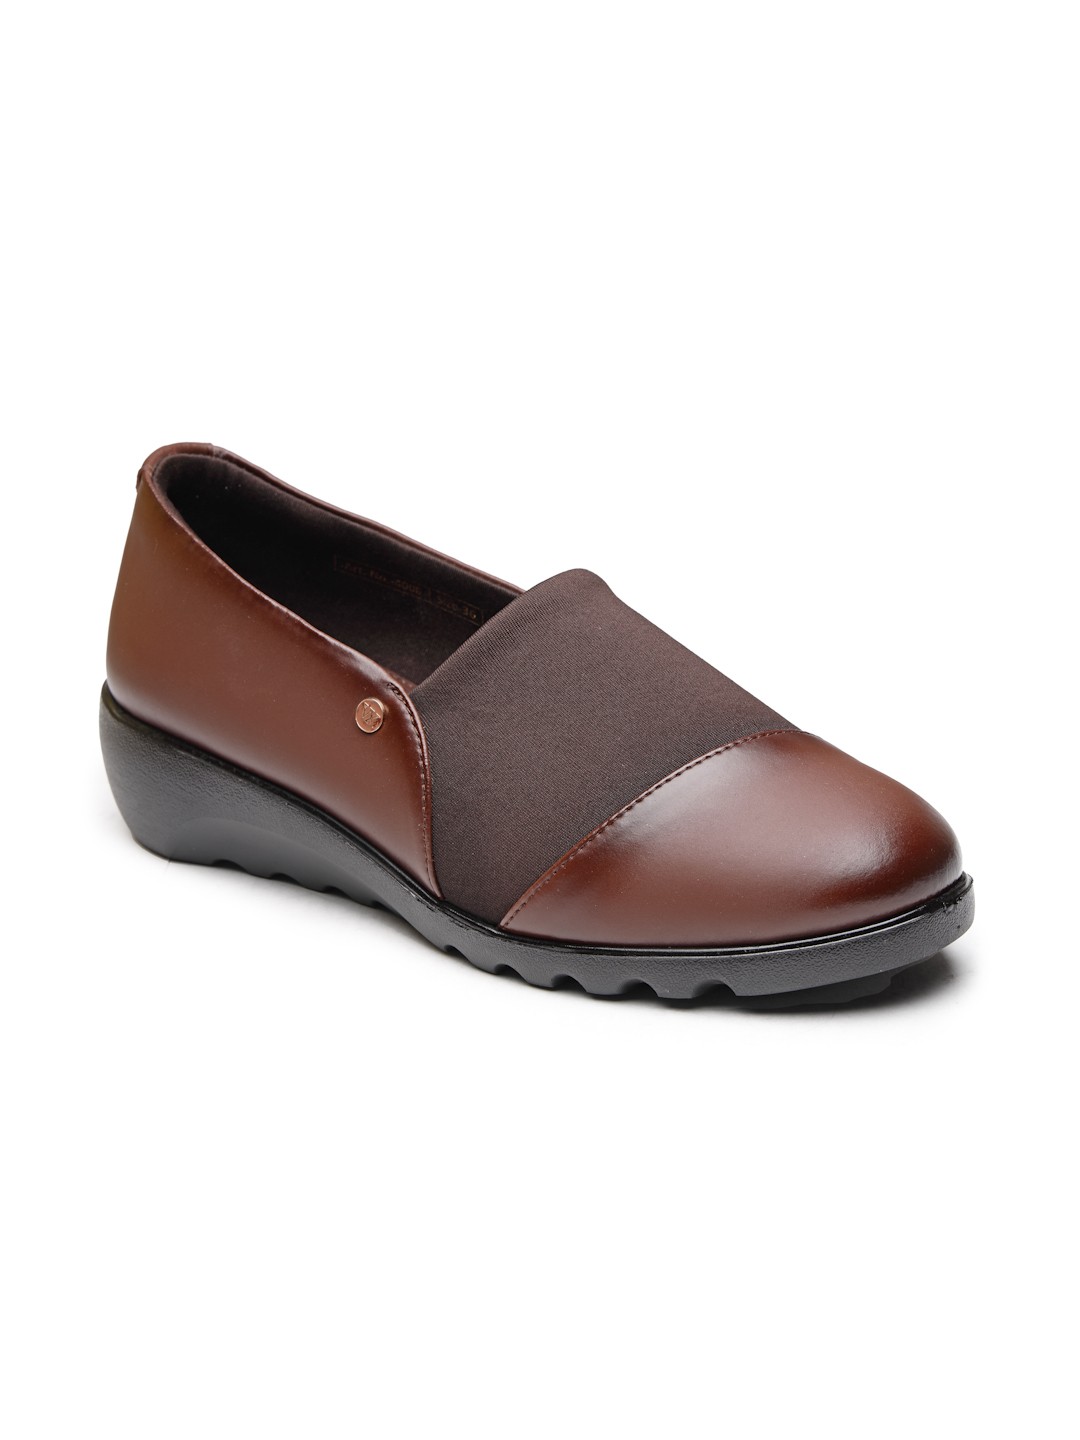 Buy Von Wellx Germany Comfort Women's Brown Casual Shoes Ayla Online in Kuwait City